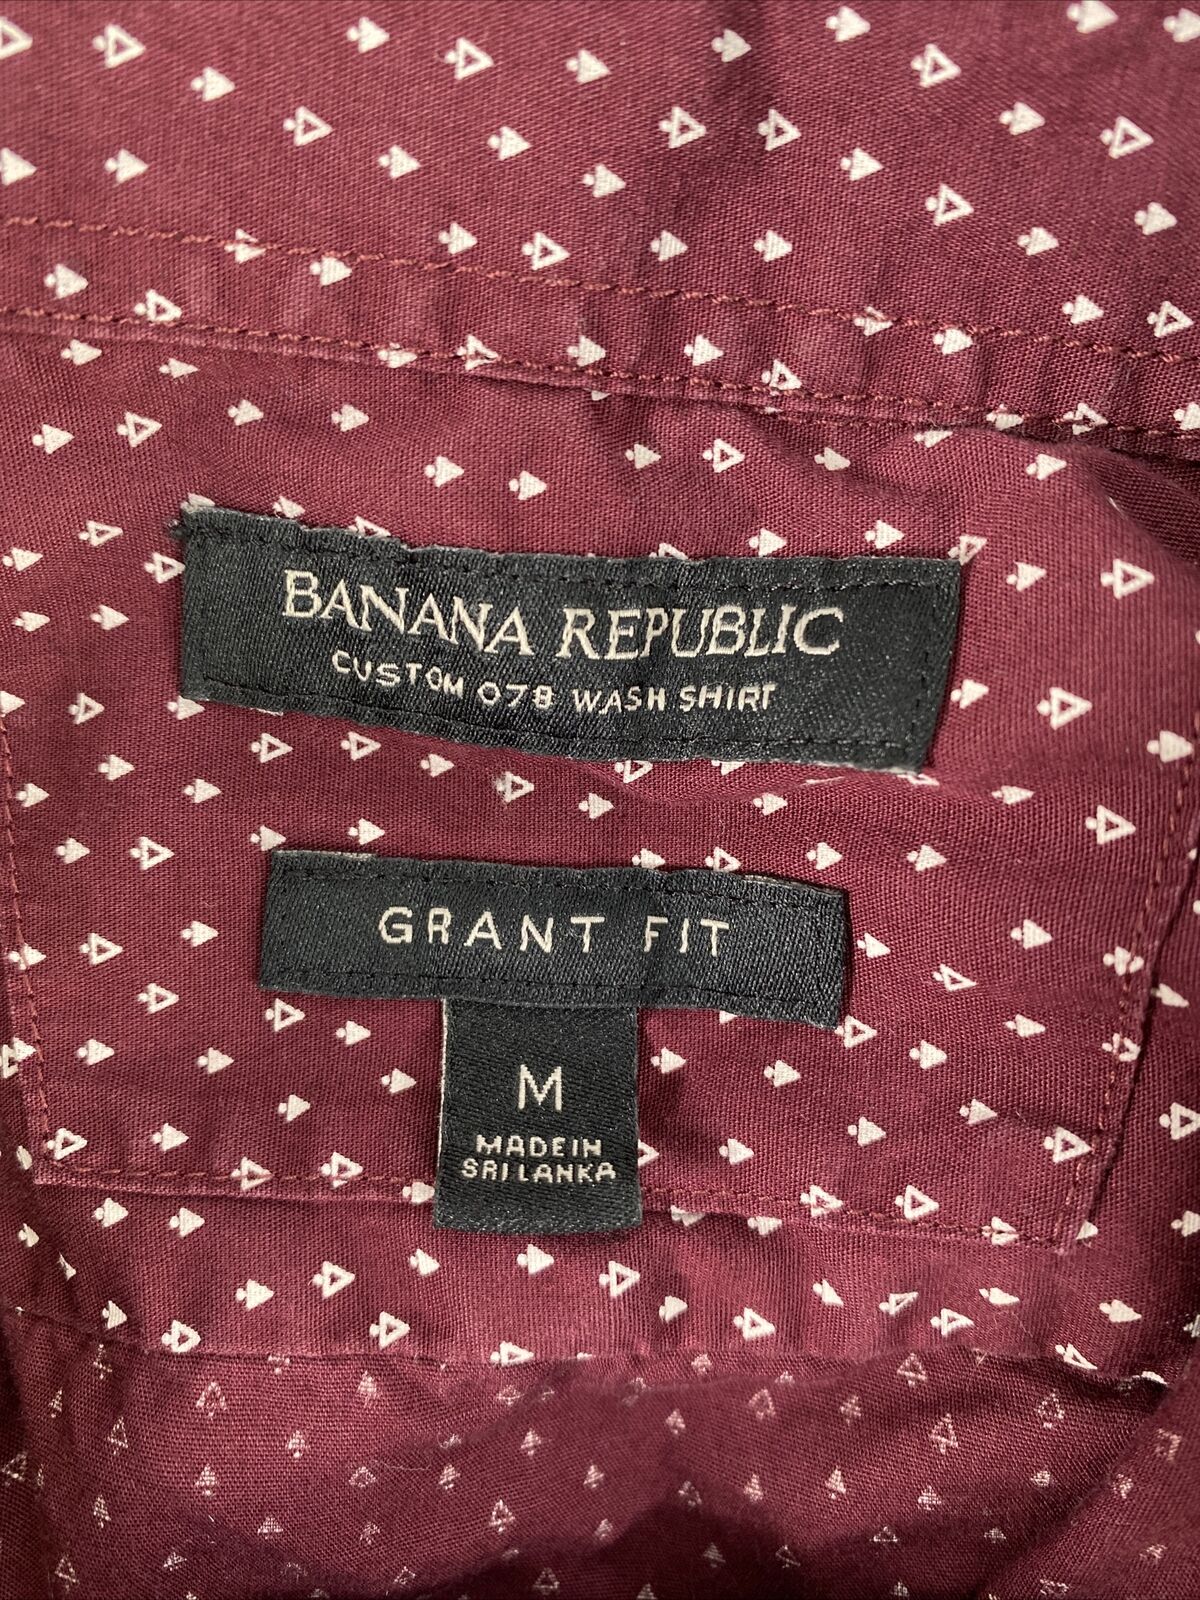 Banana Republic Men's Red/Burgundy Grant Fit Button Up Shirt - M